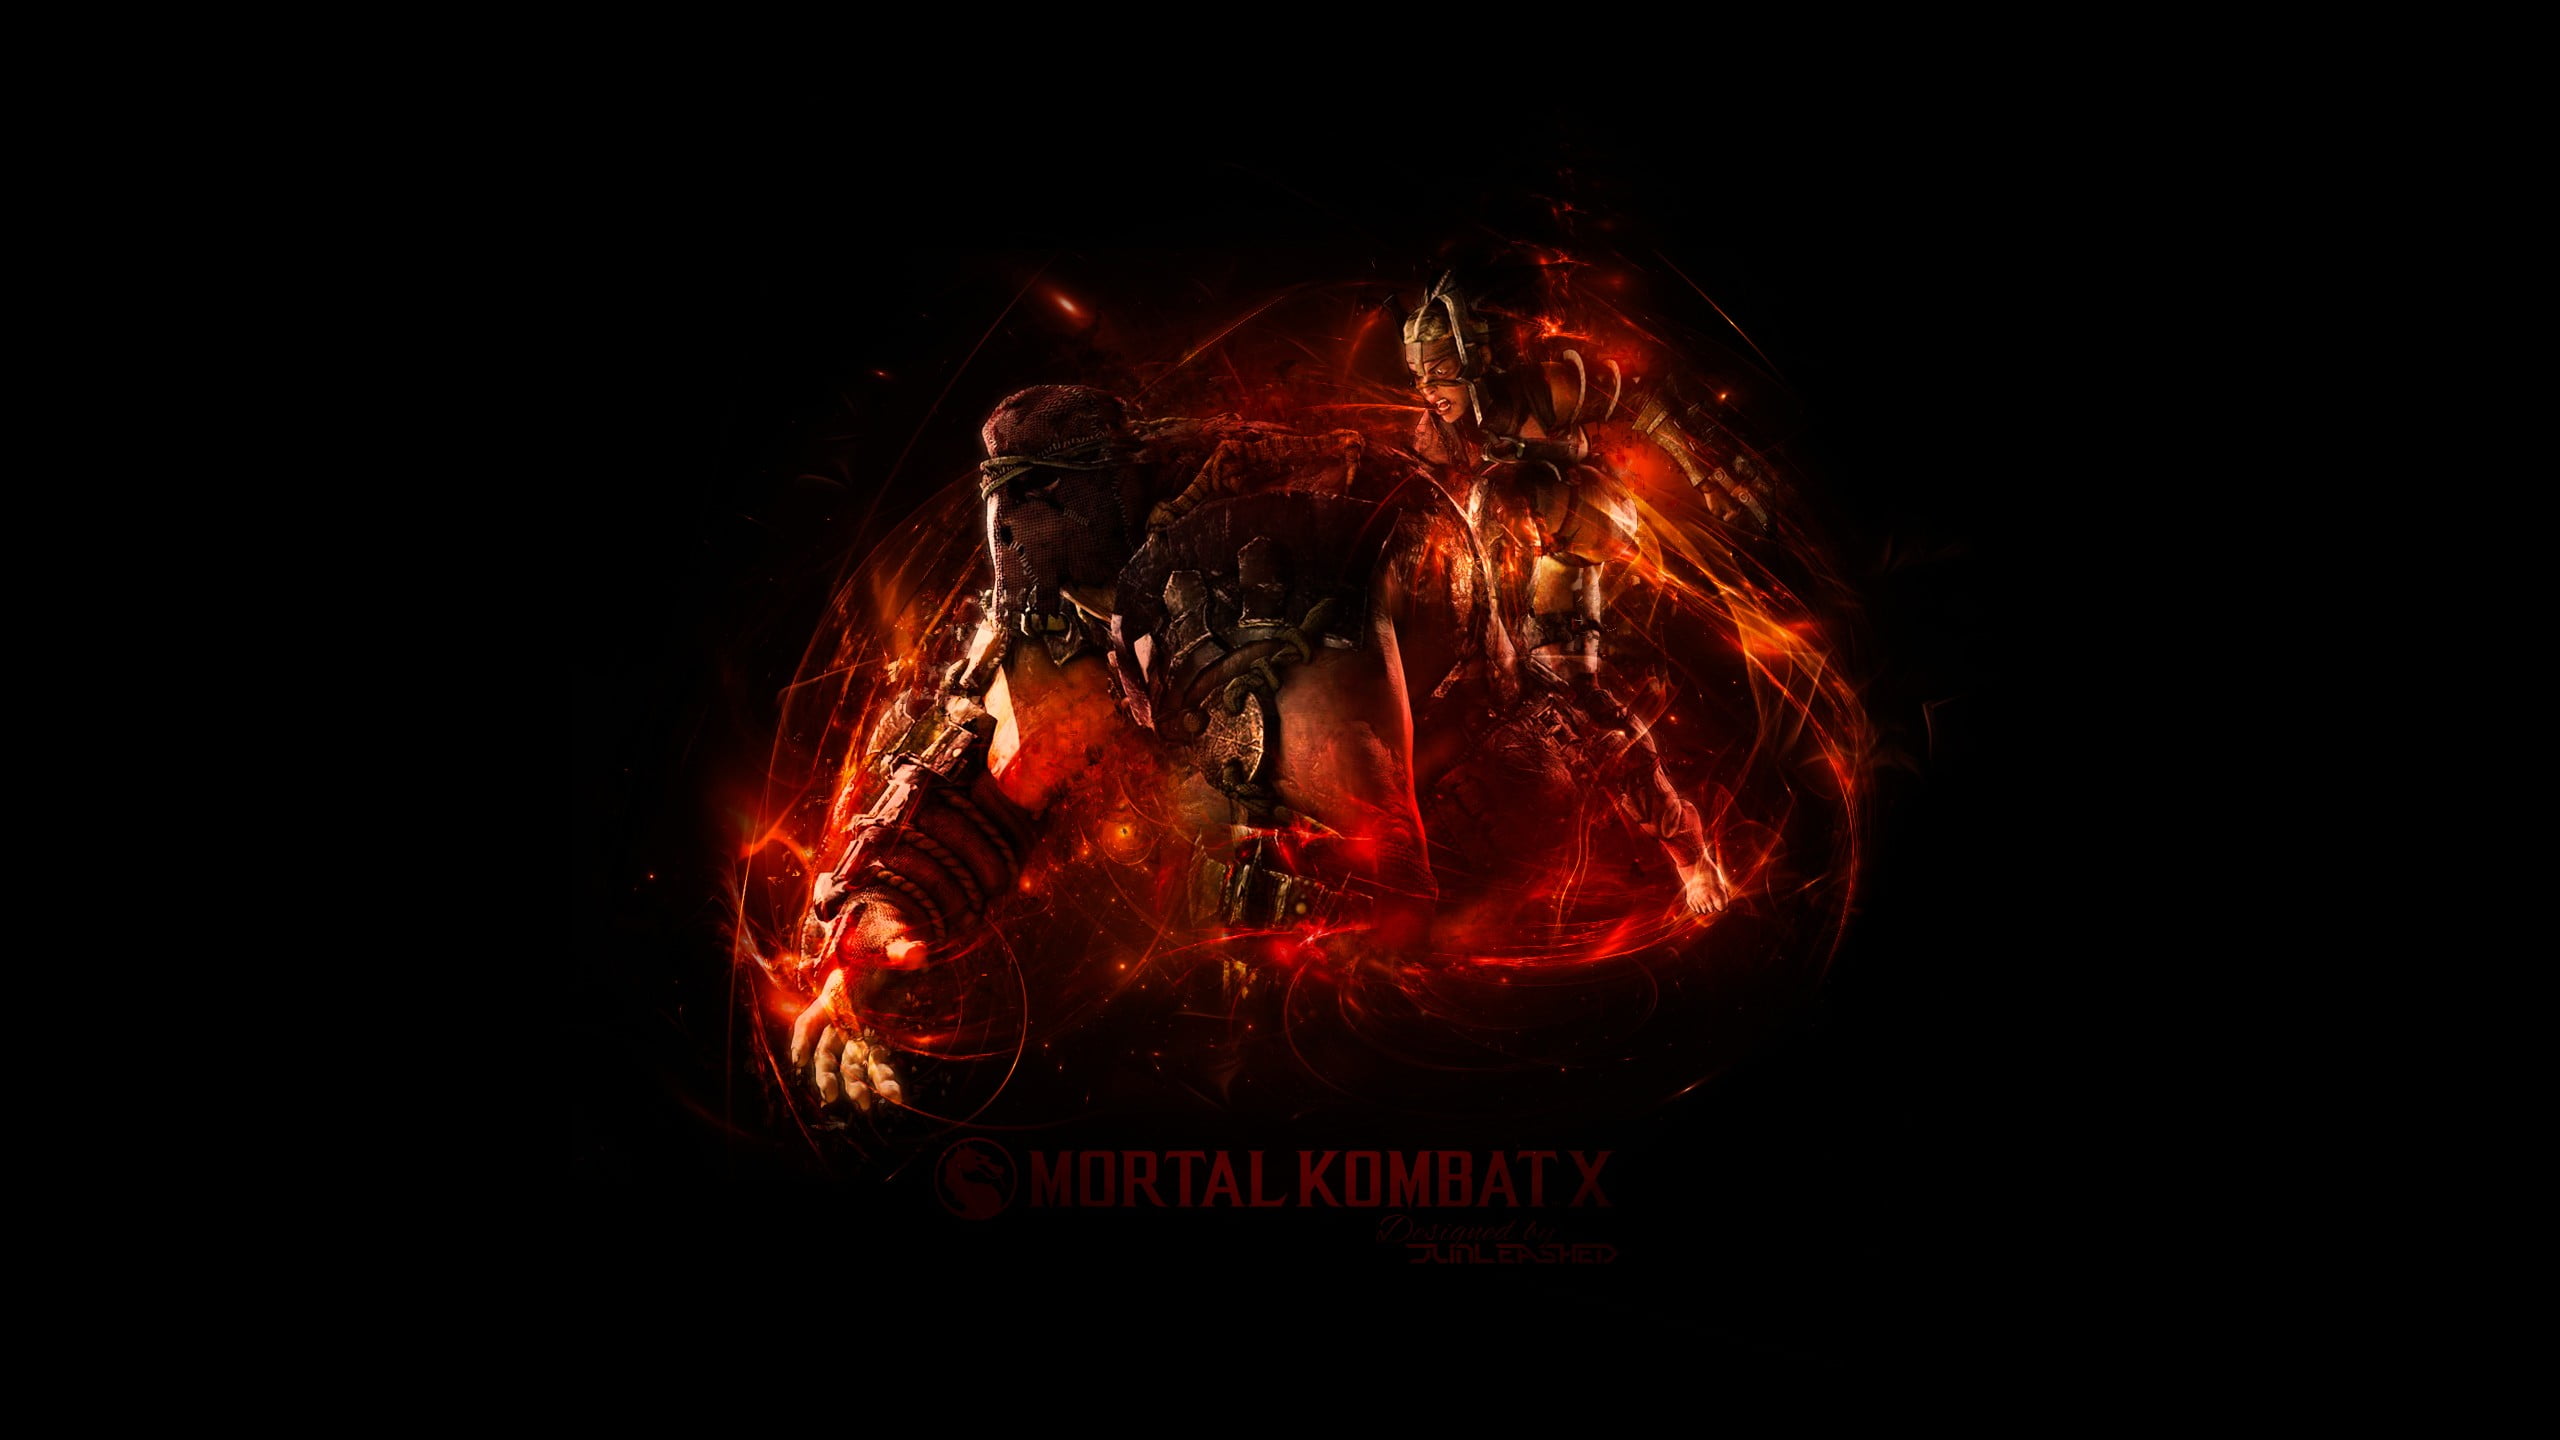 black and red Mortal Kombat X wallpaper, video games, Mortal Kombat X, Mortal Kombat, simple background